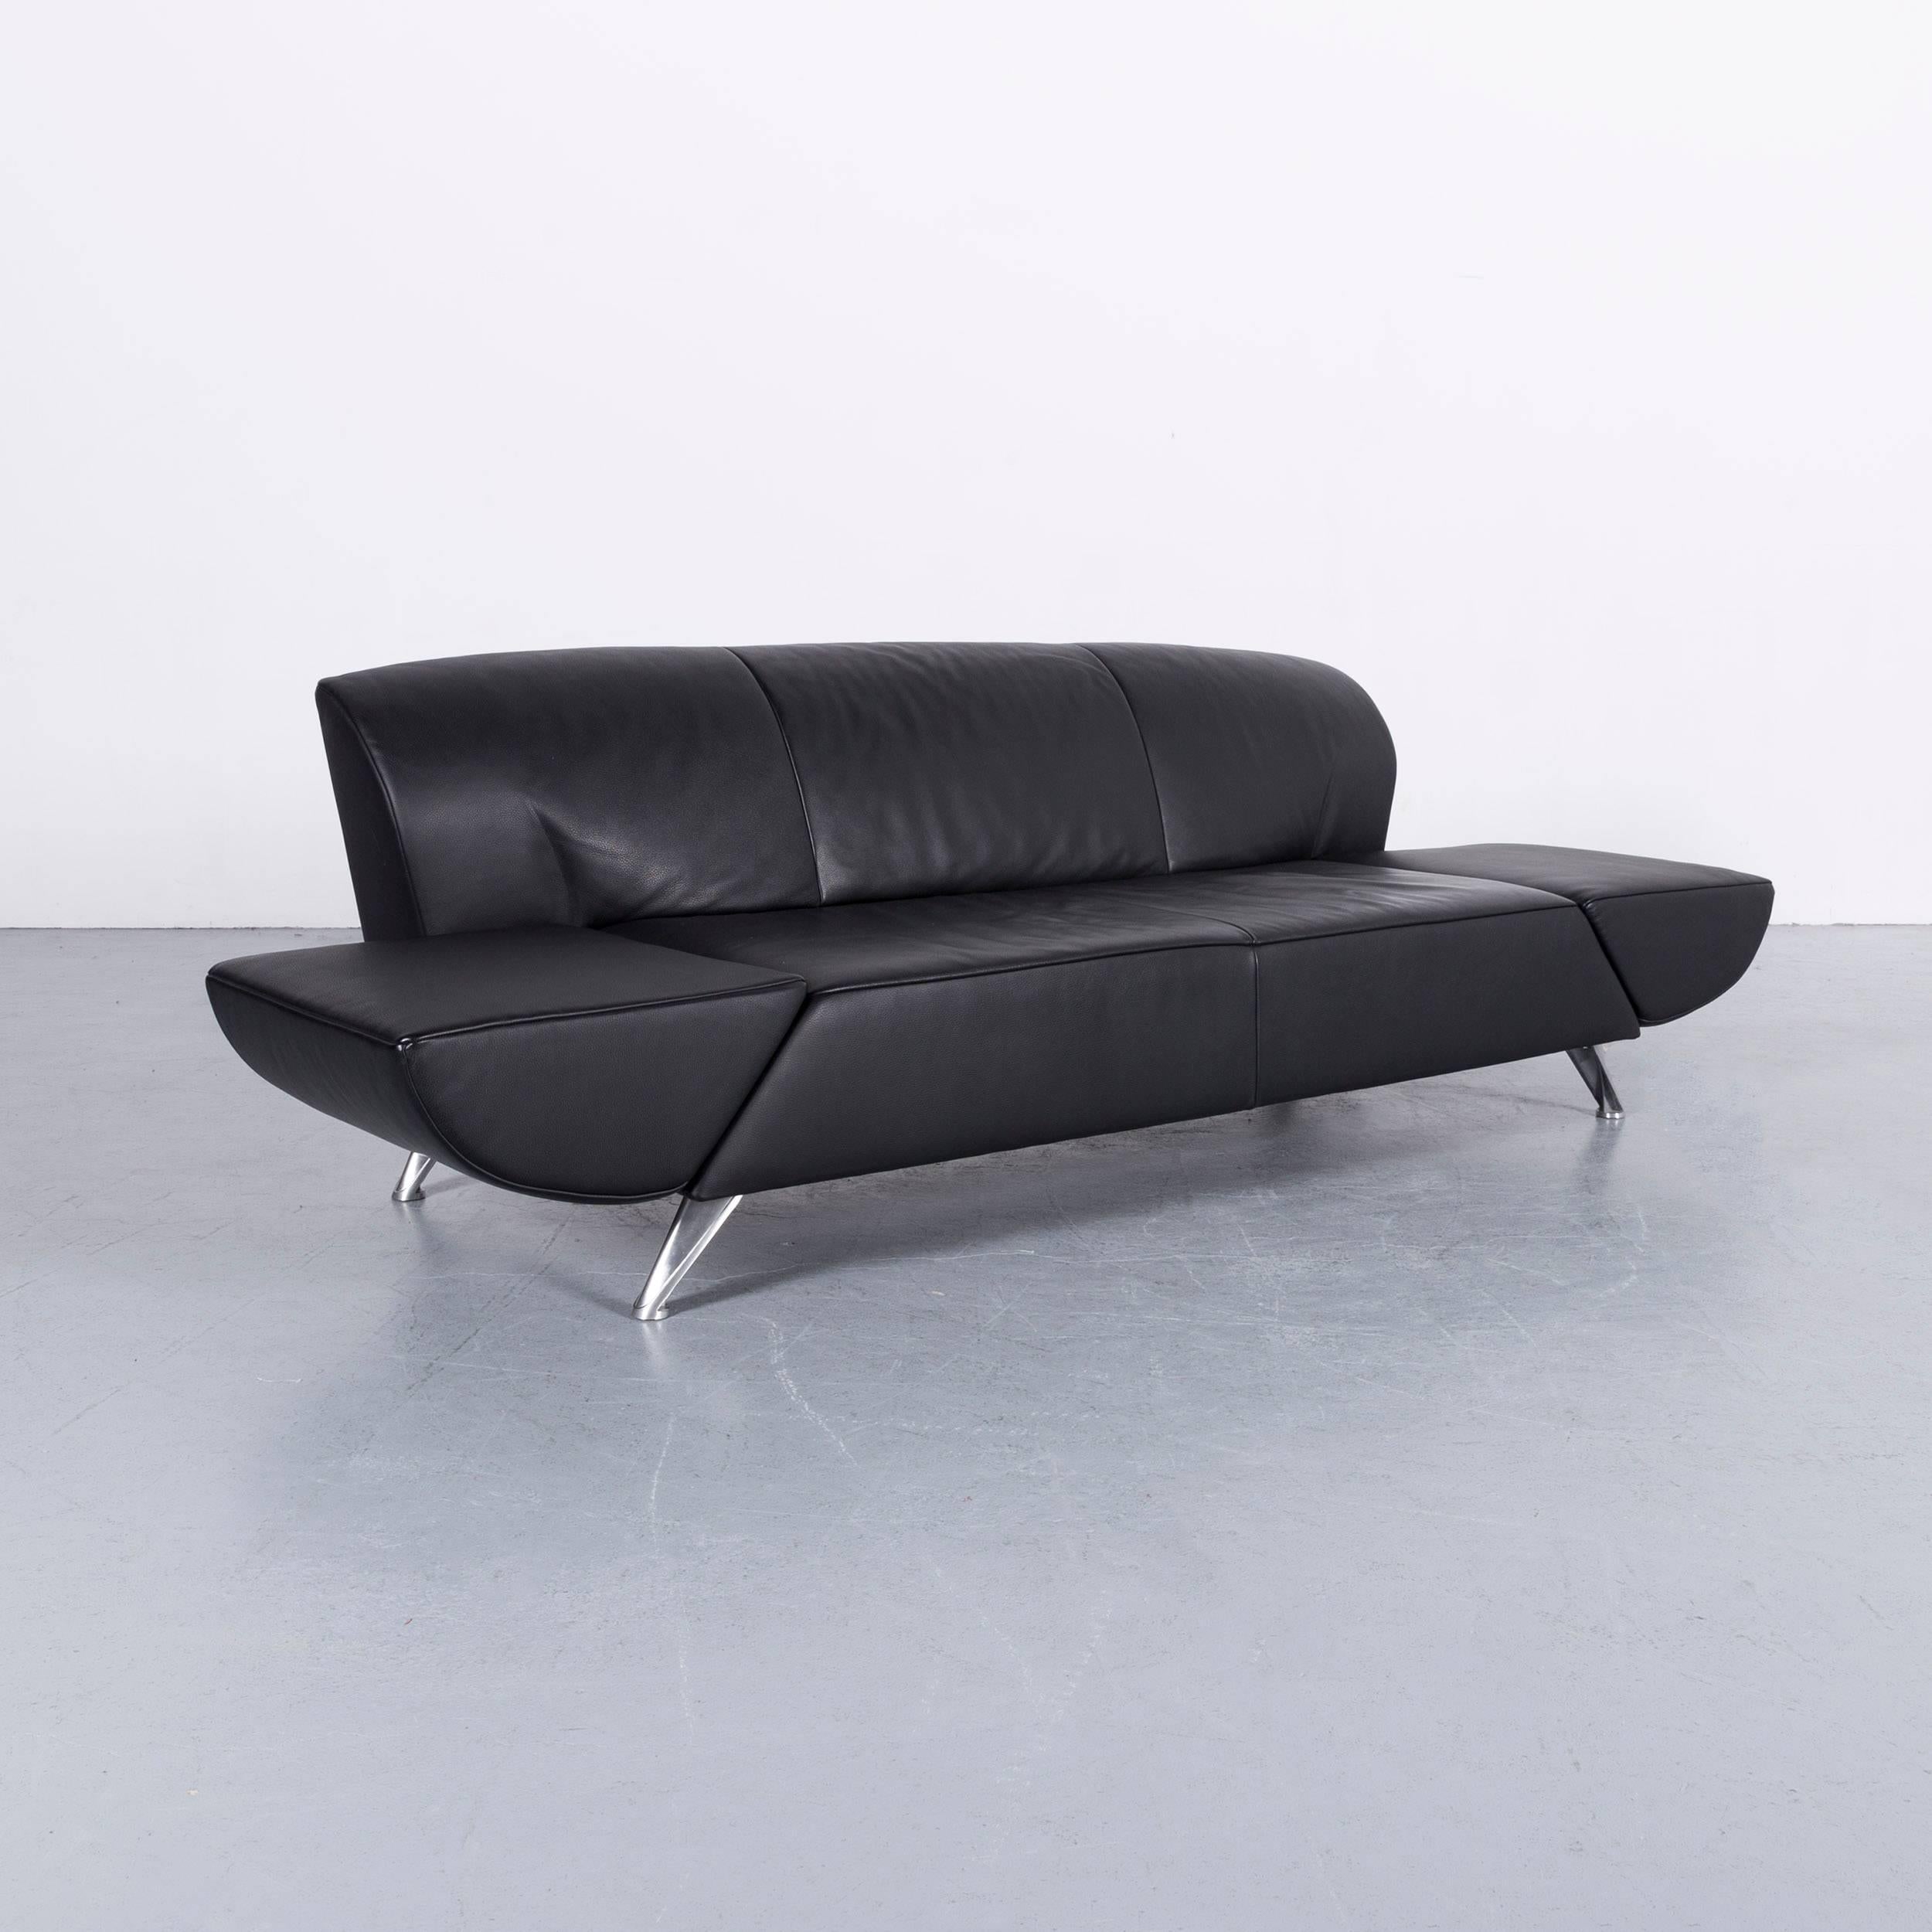 Jori JR 9700 Leather Sofa Black Three-Seat Couch 4